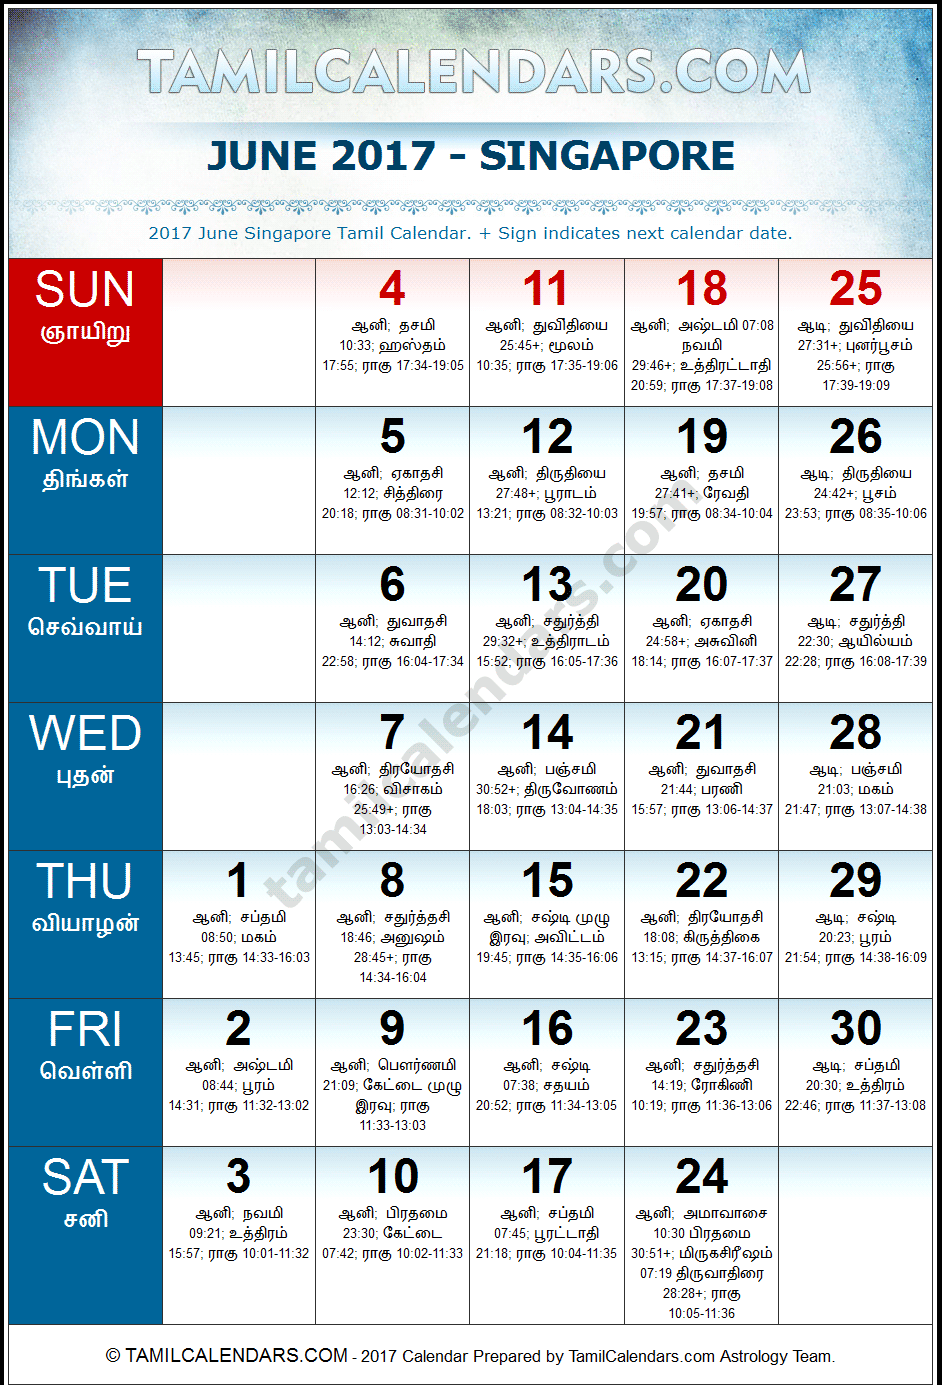 June 2017 Tamil Calendar for Singapore